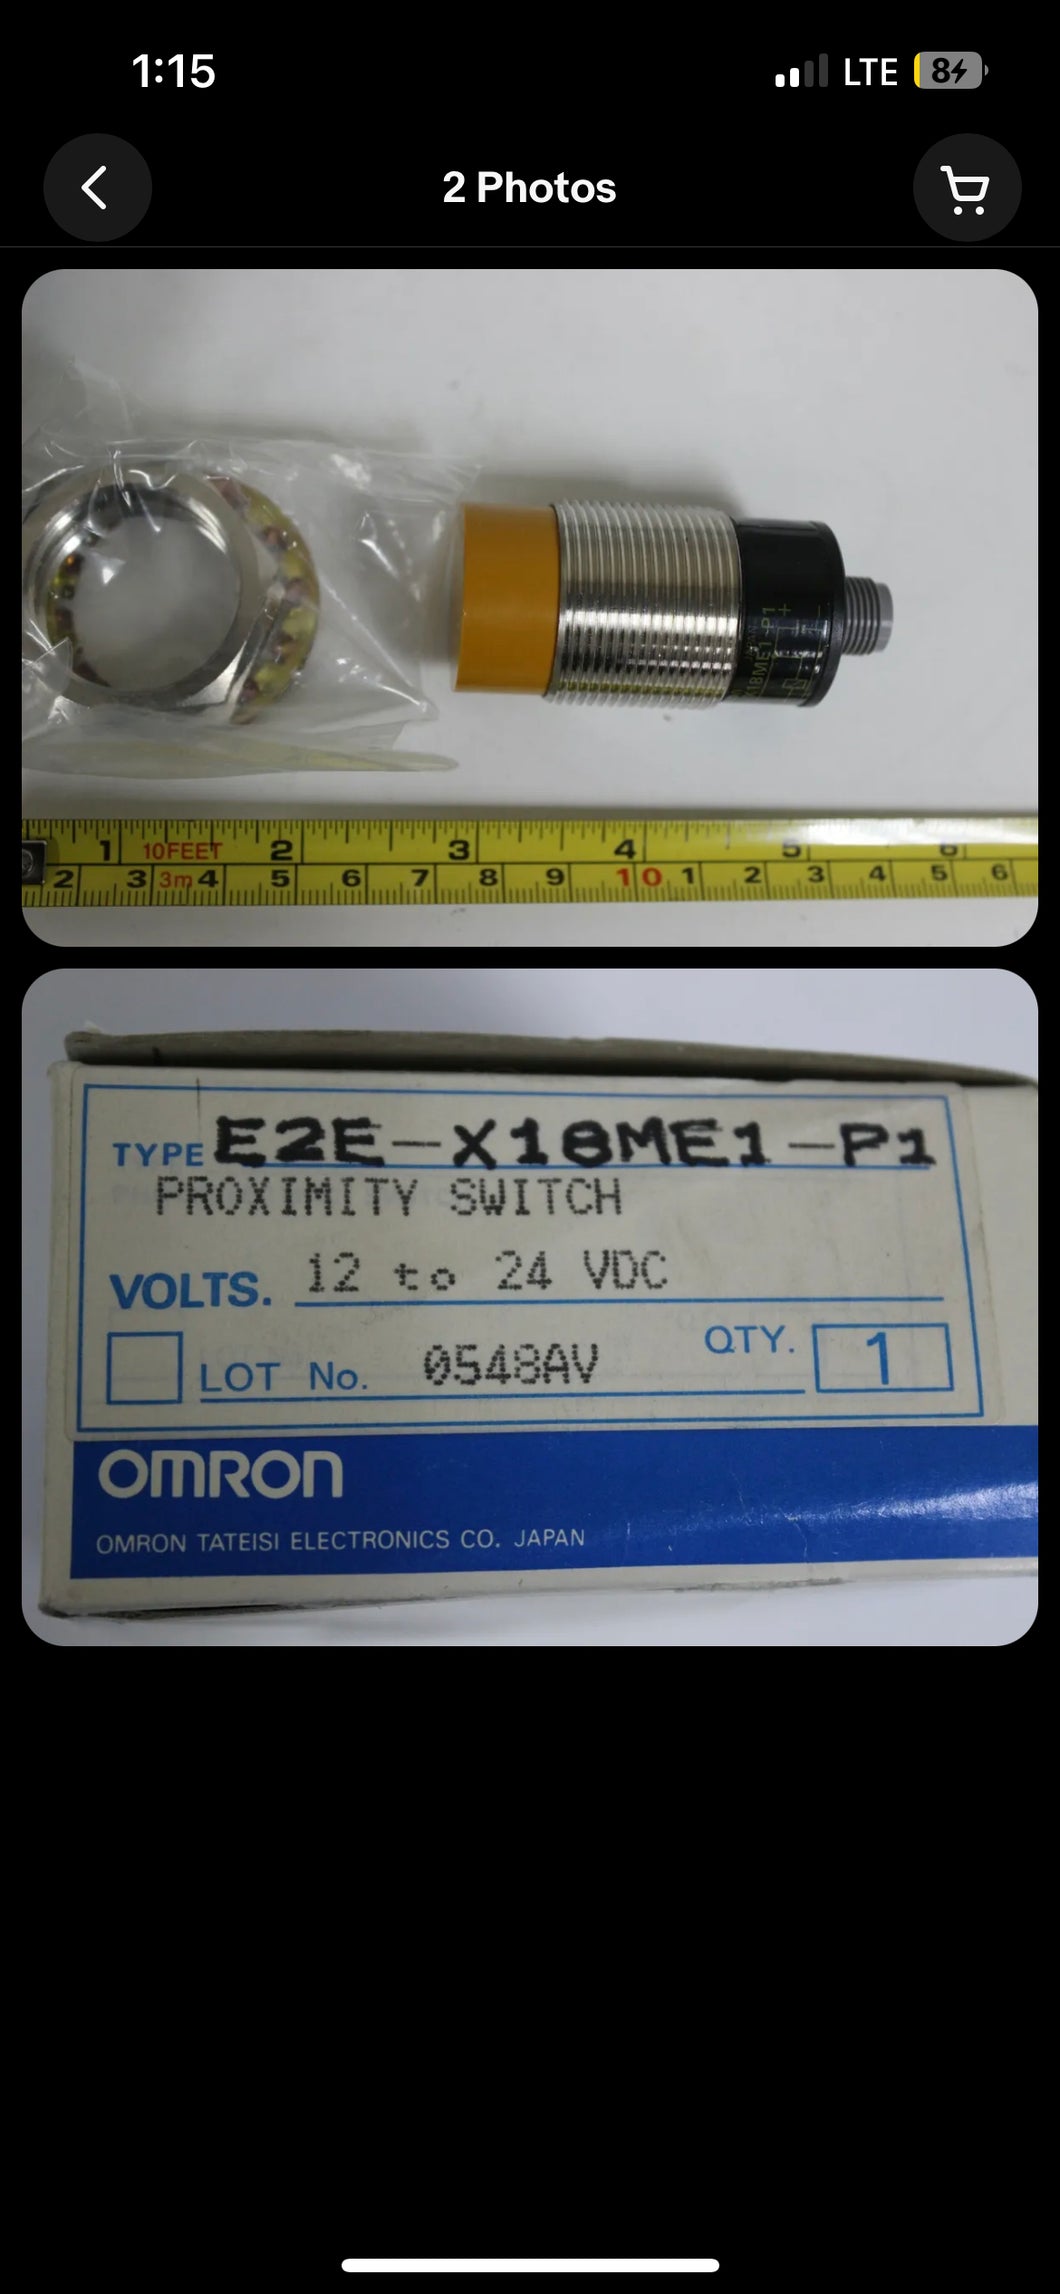 Omron E2E-X18ME1-P1 Proximity Sensor